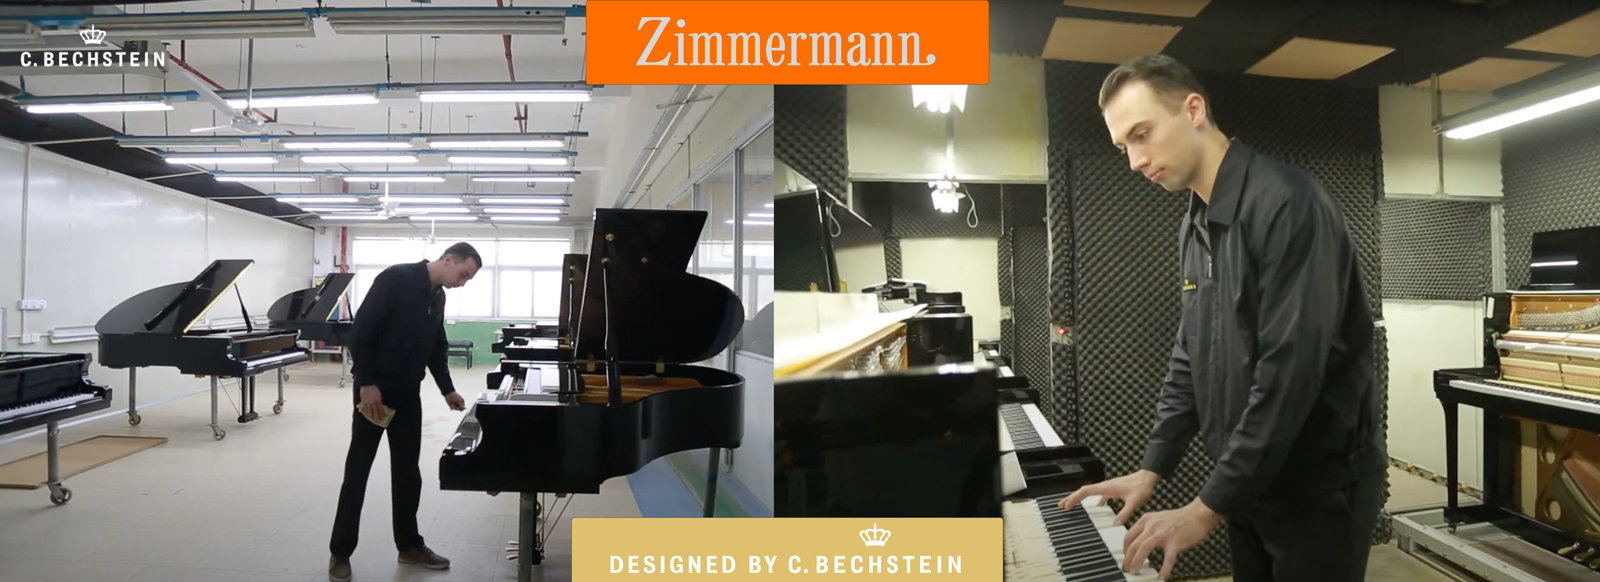 dan-piano-grand-zimmermann